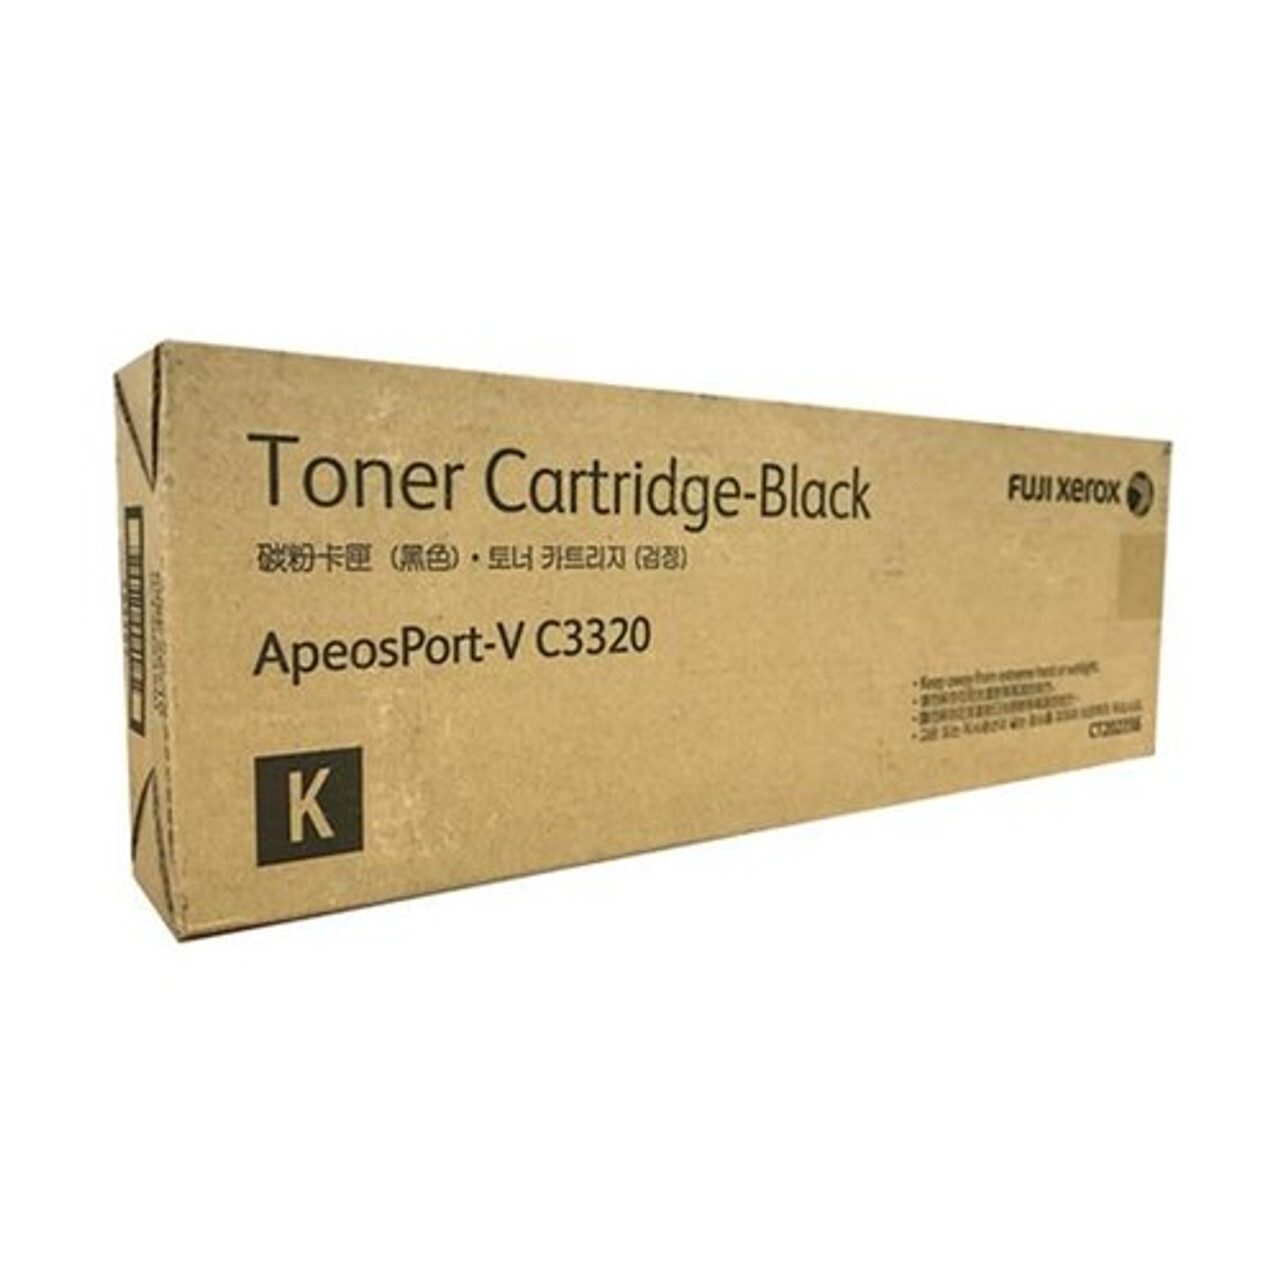 Fuji Xerox Genuine CT202356 Toner Cartridge-Black ApeosPort-V C3320 - Open Box Full Size Image